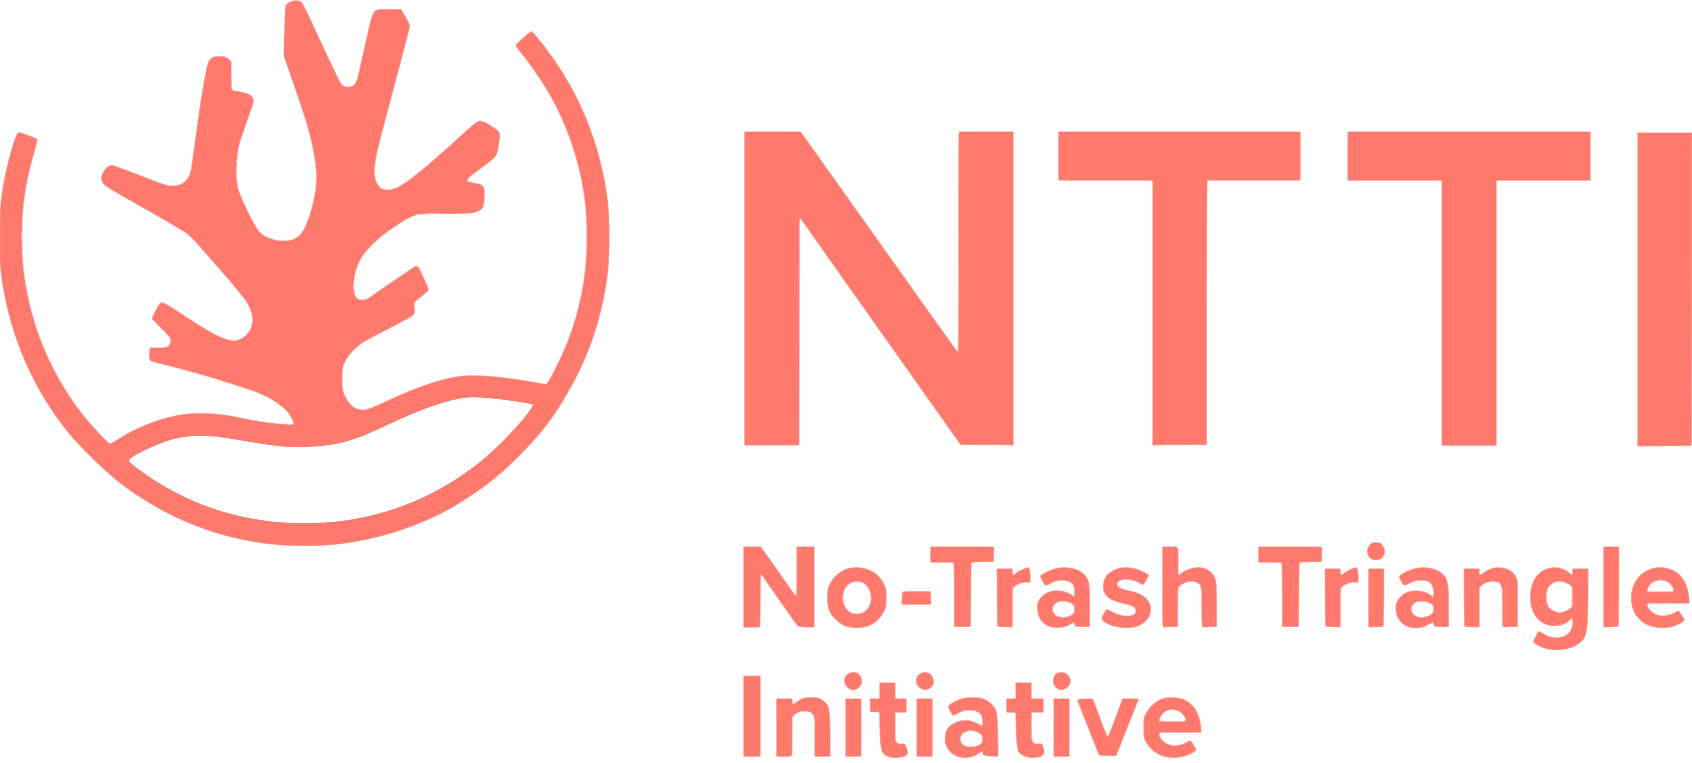 No-Trash Triangle Initiative